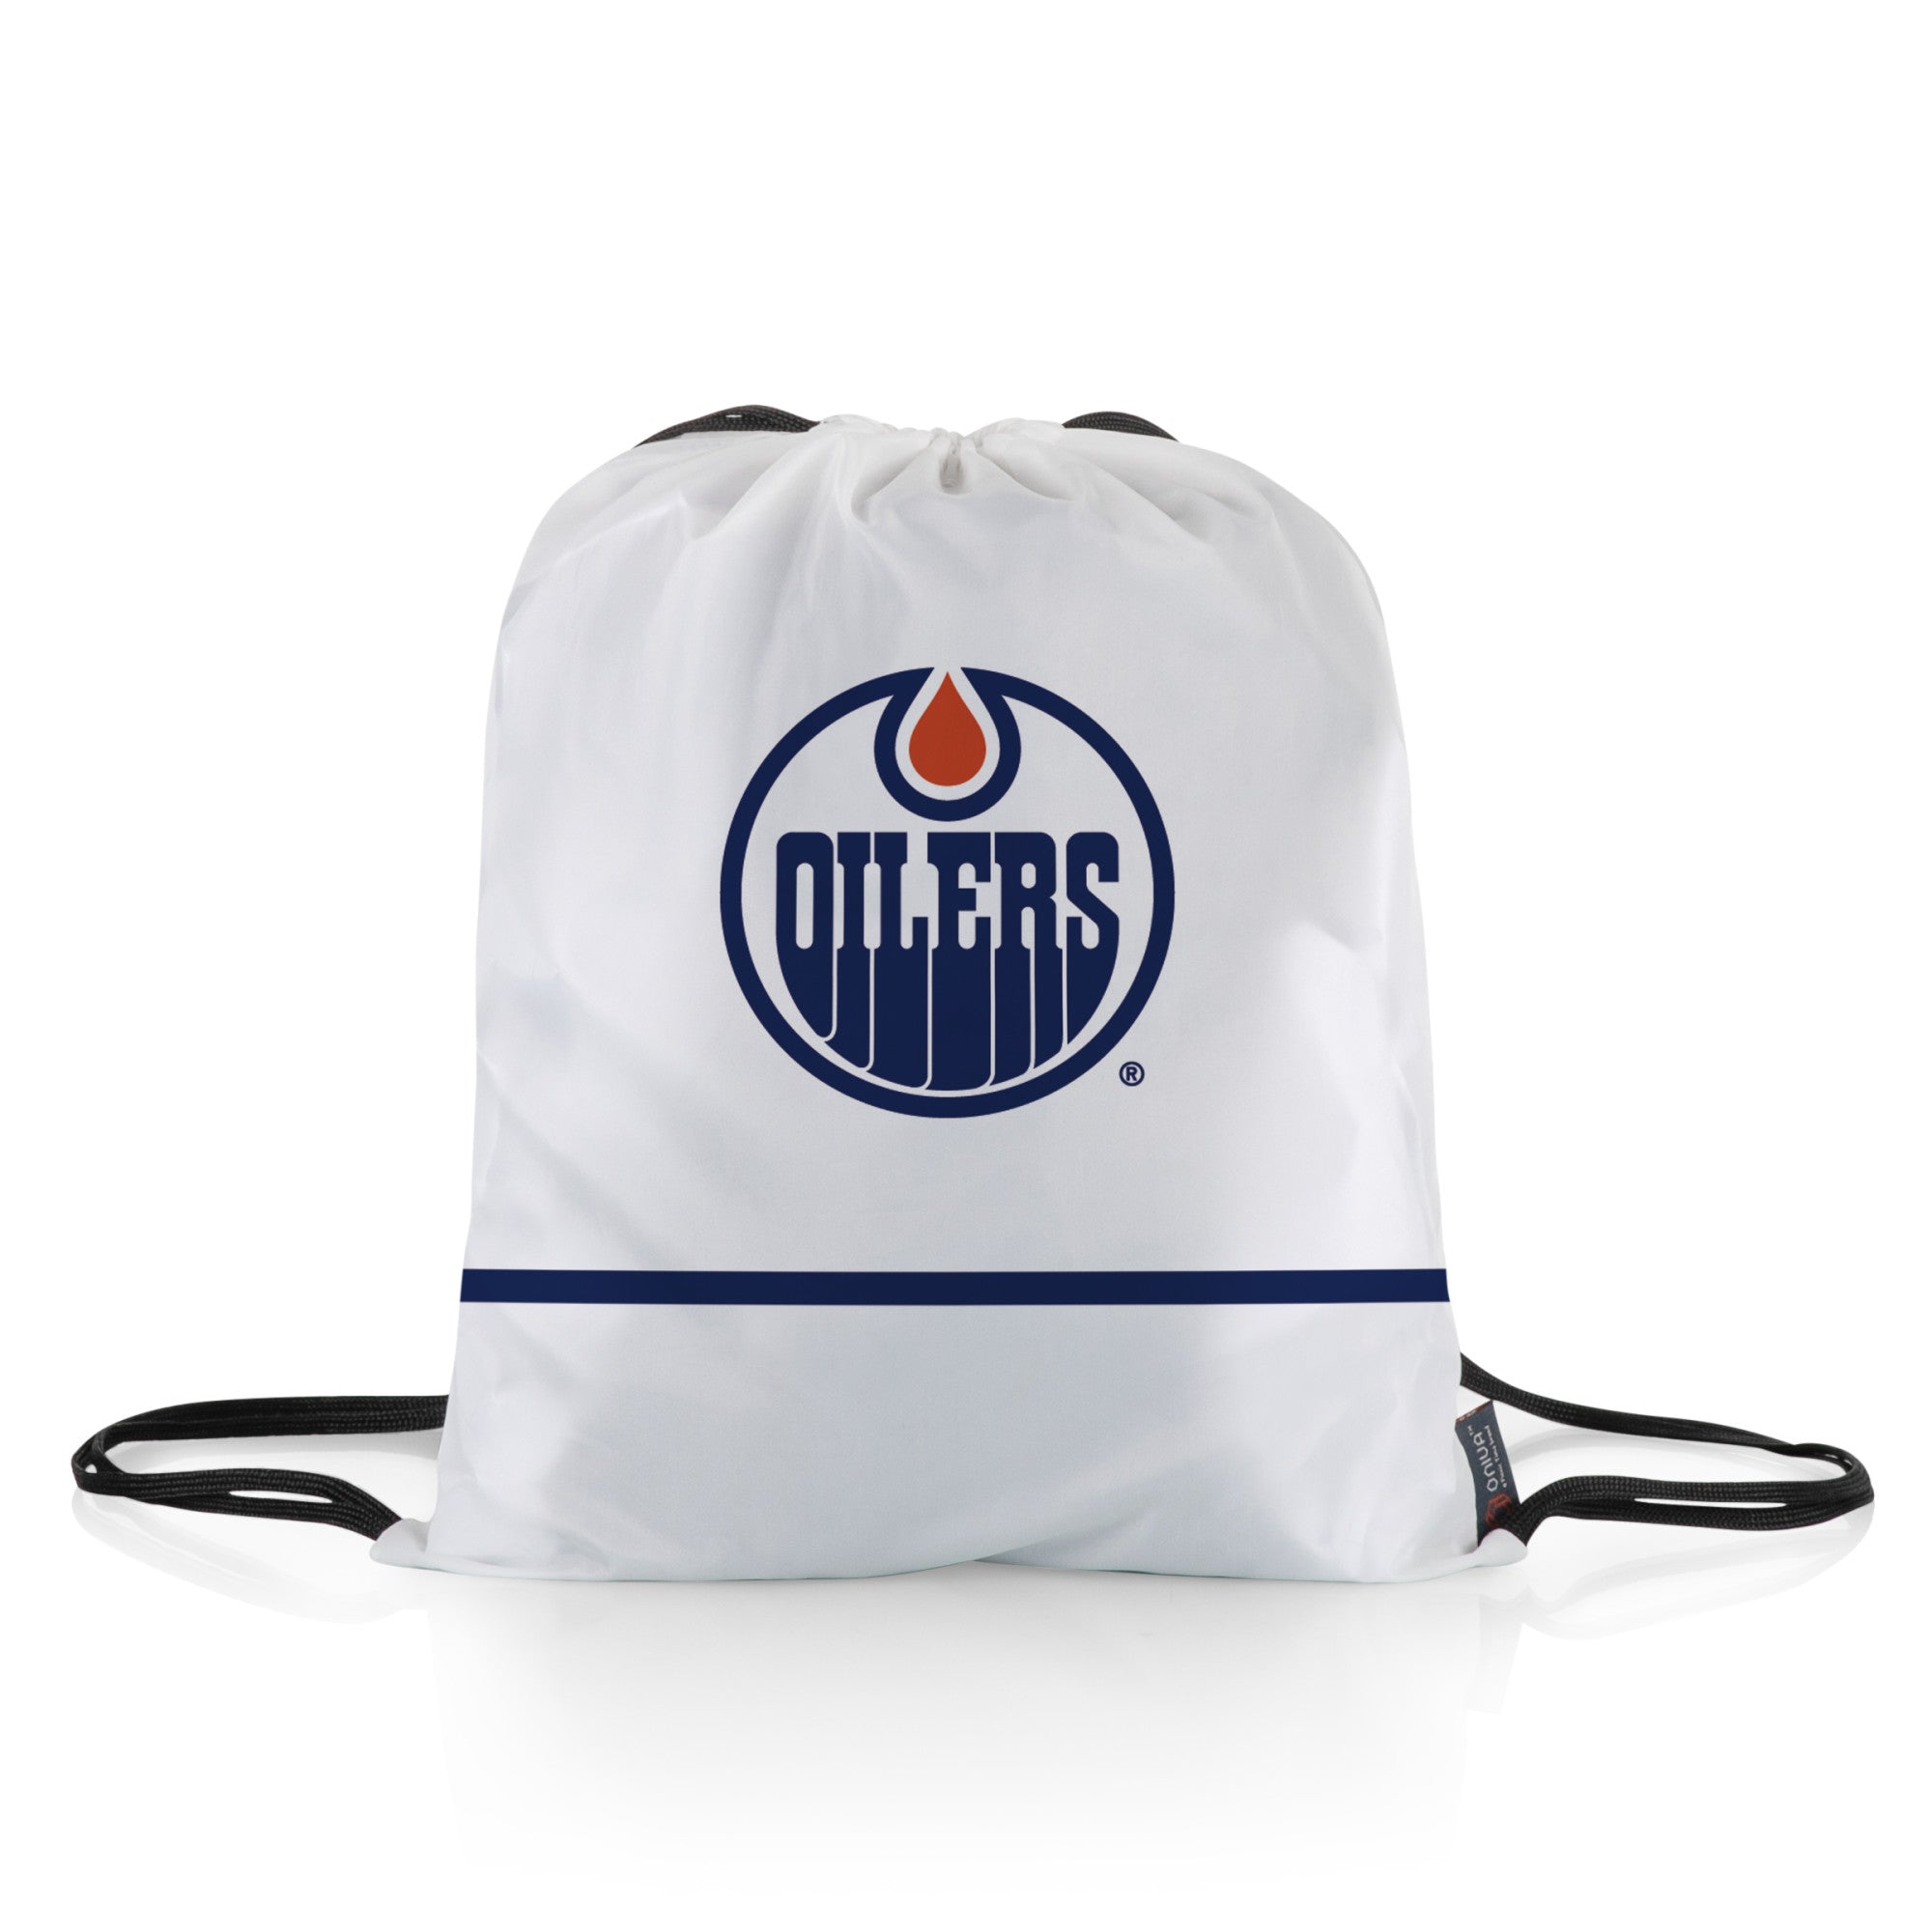 Edmonton Oilers - Impresa Picnic Blanket